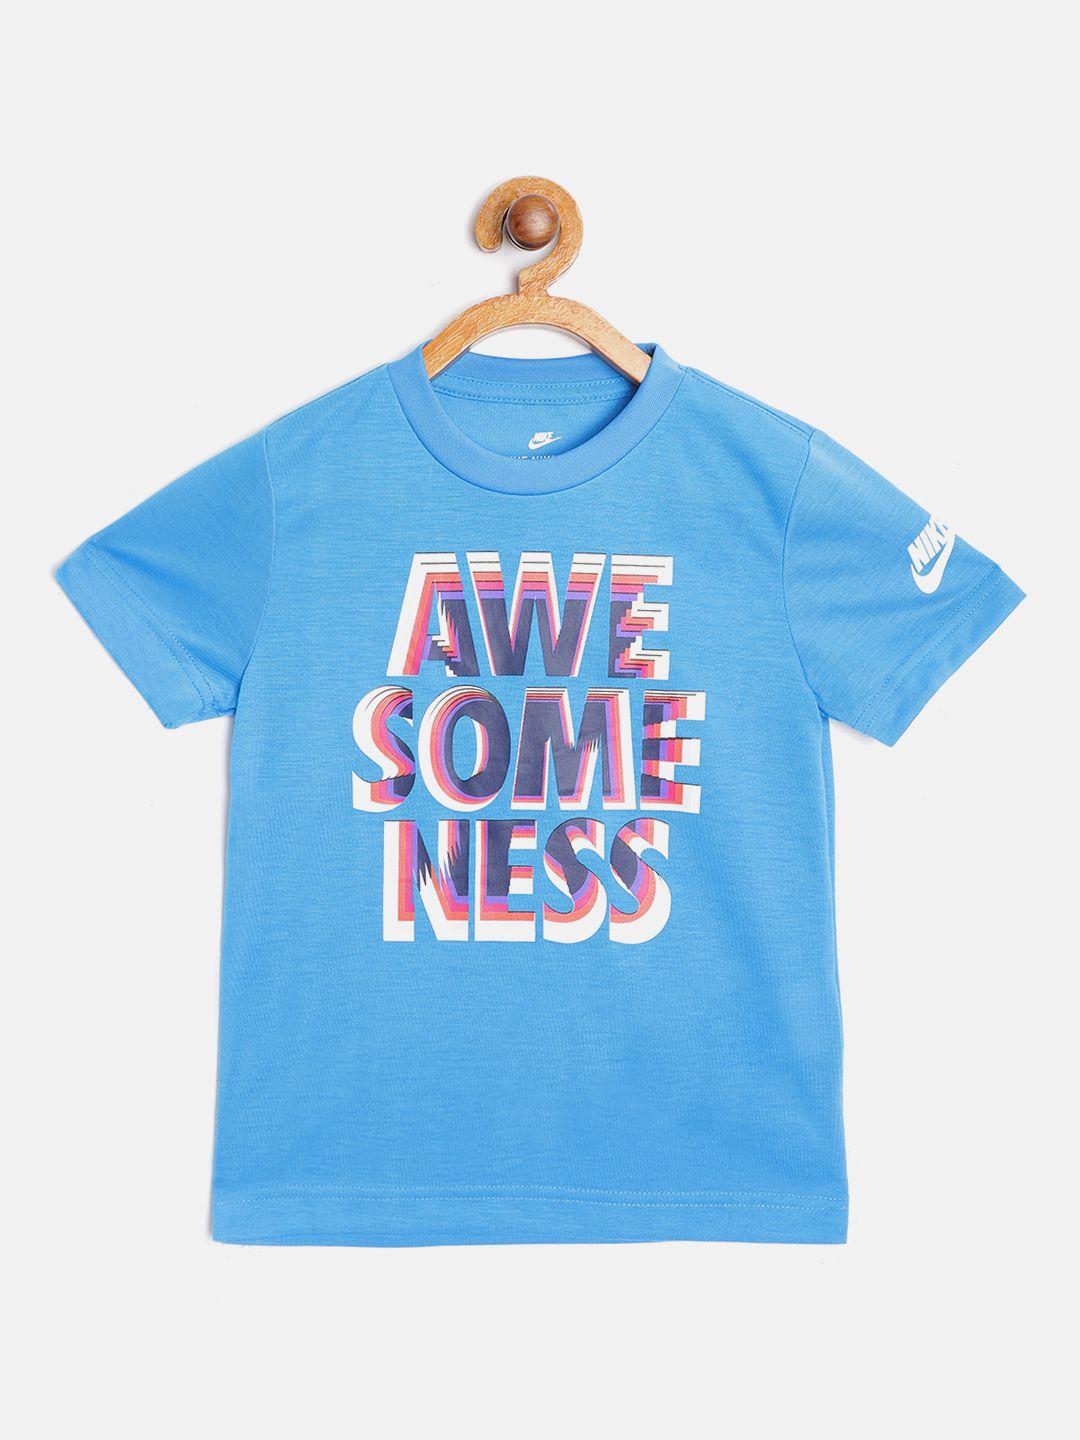 nike boys turquoise blue awesomeness printed t-shirt